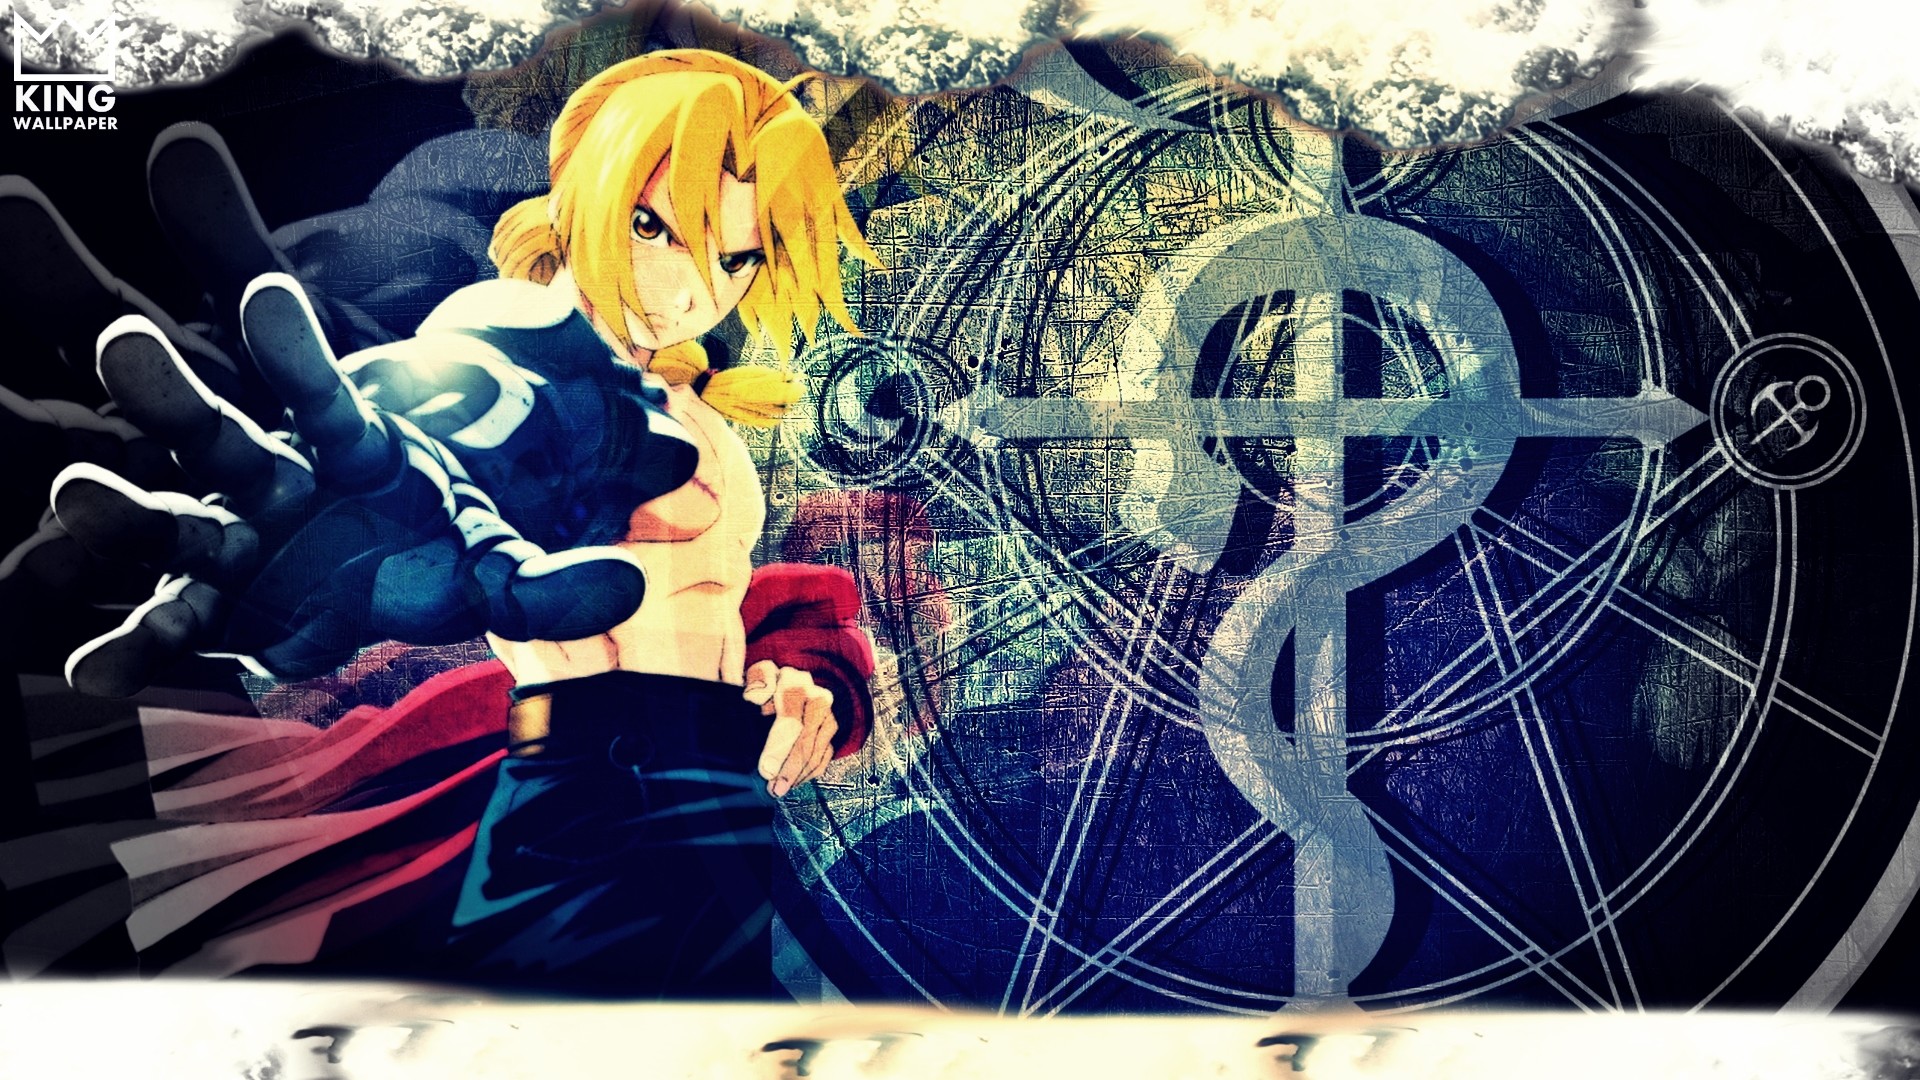 Fullmetal Alchemist FullMetal Alchemist Edward Elric #4K #wallpaper  #hdwallpaper #desktop